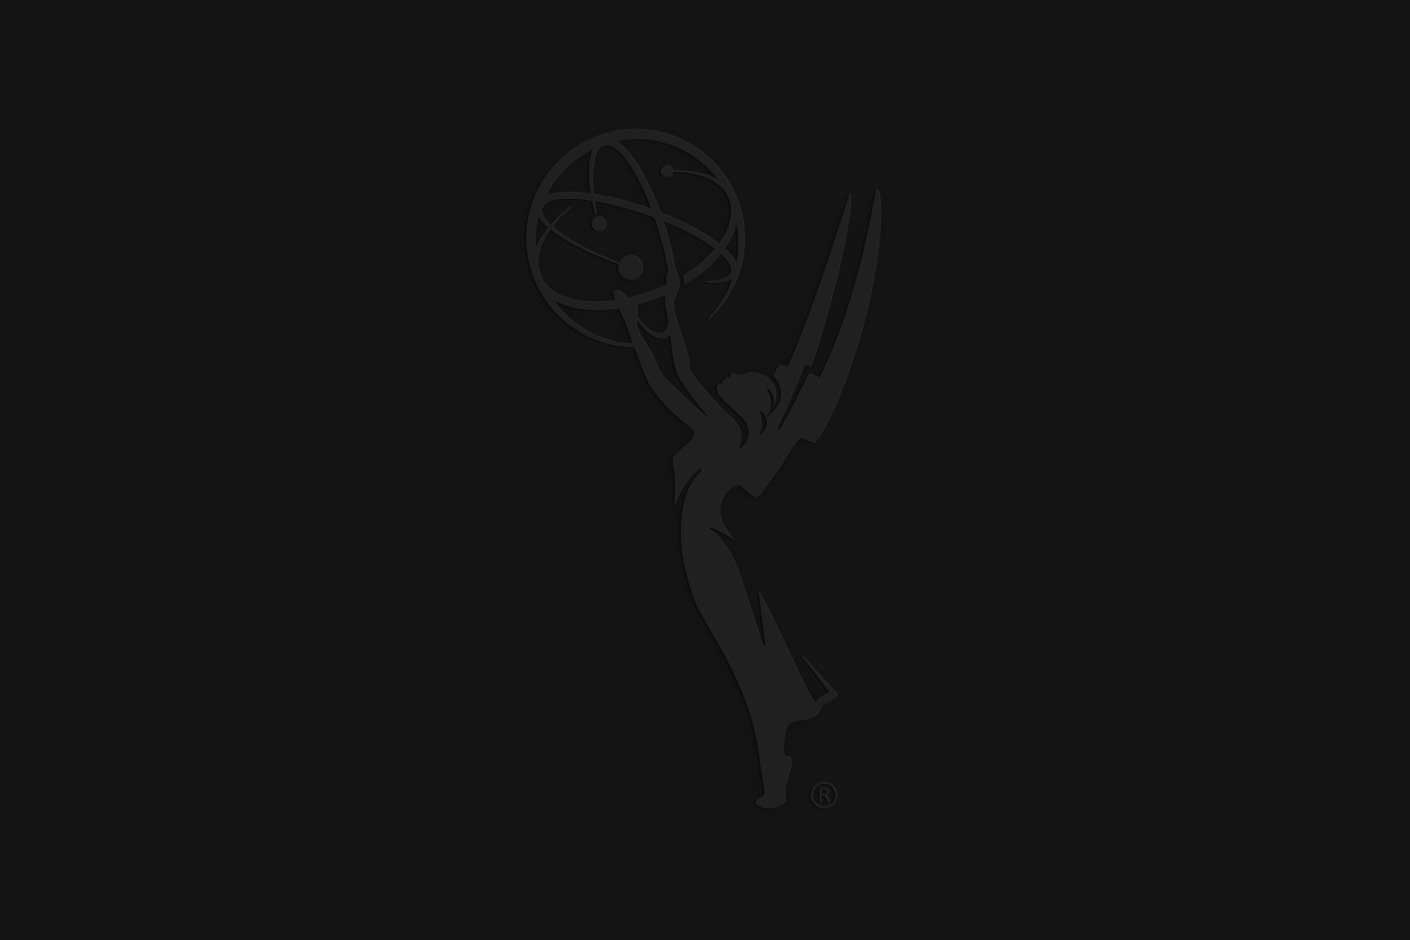 2019 Creative Arts Emmy Awards